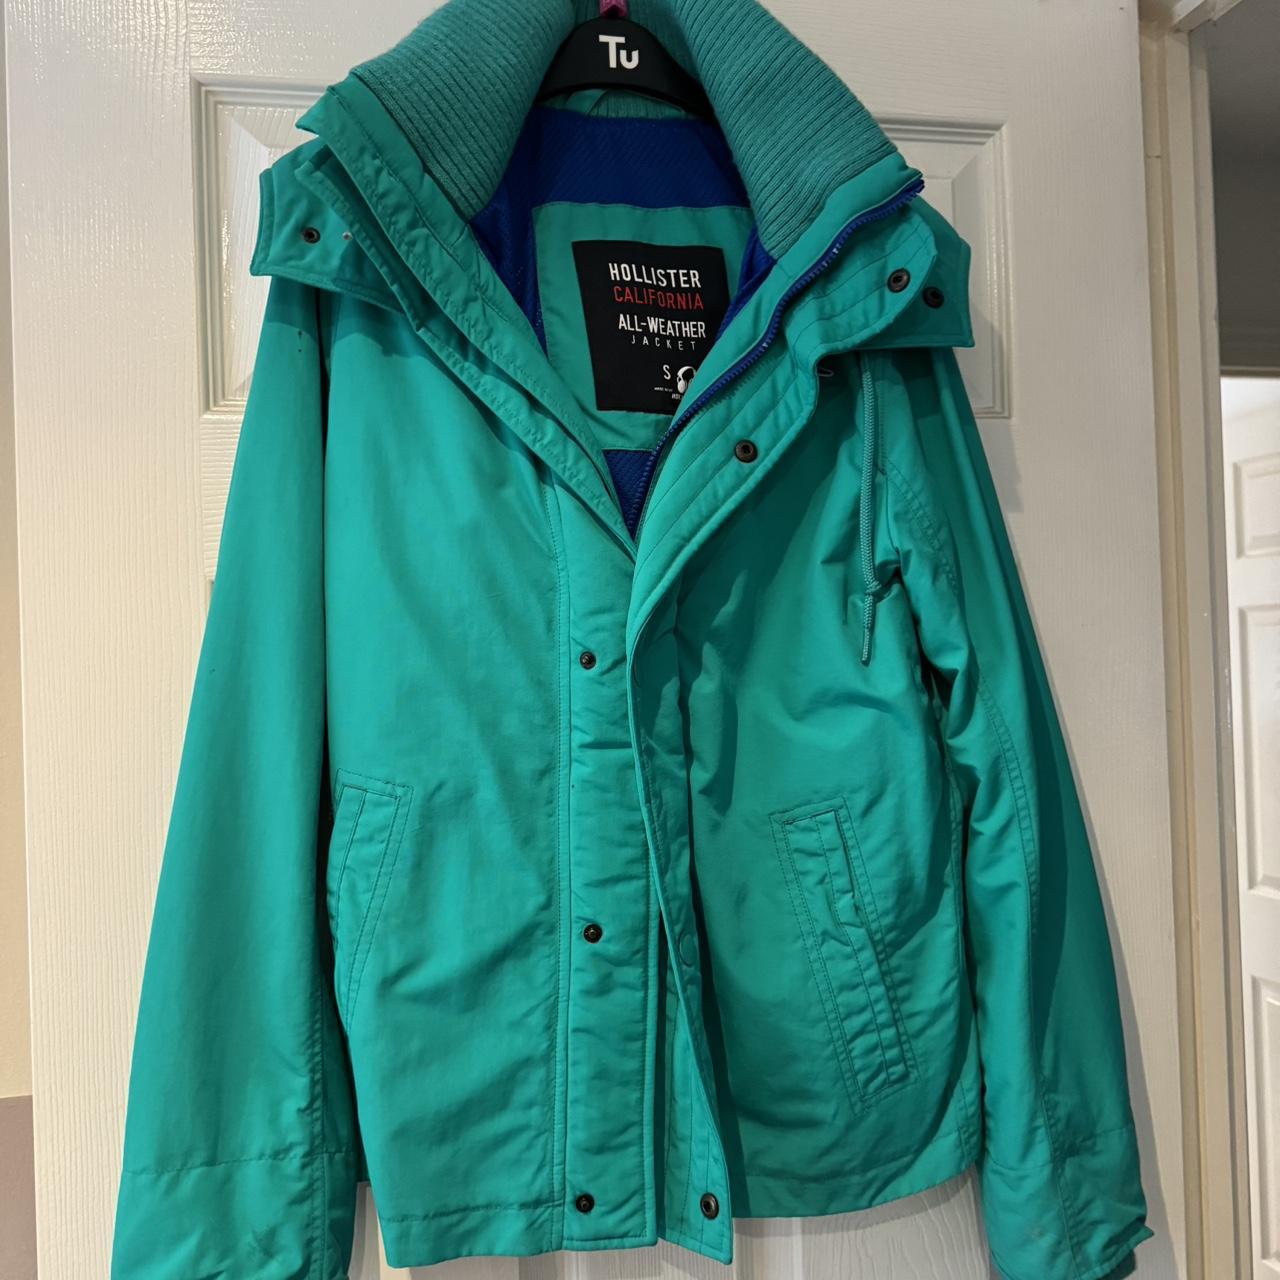 Hollister California Womans All-Weather Jacket size medium green